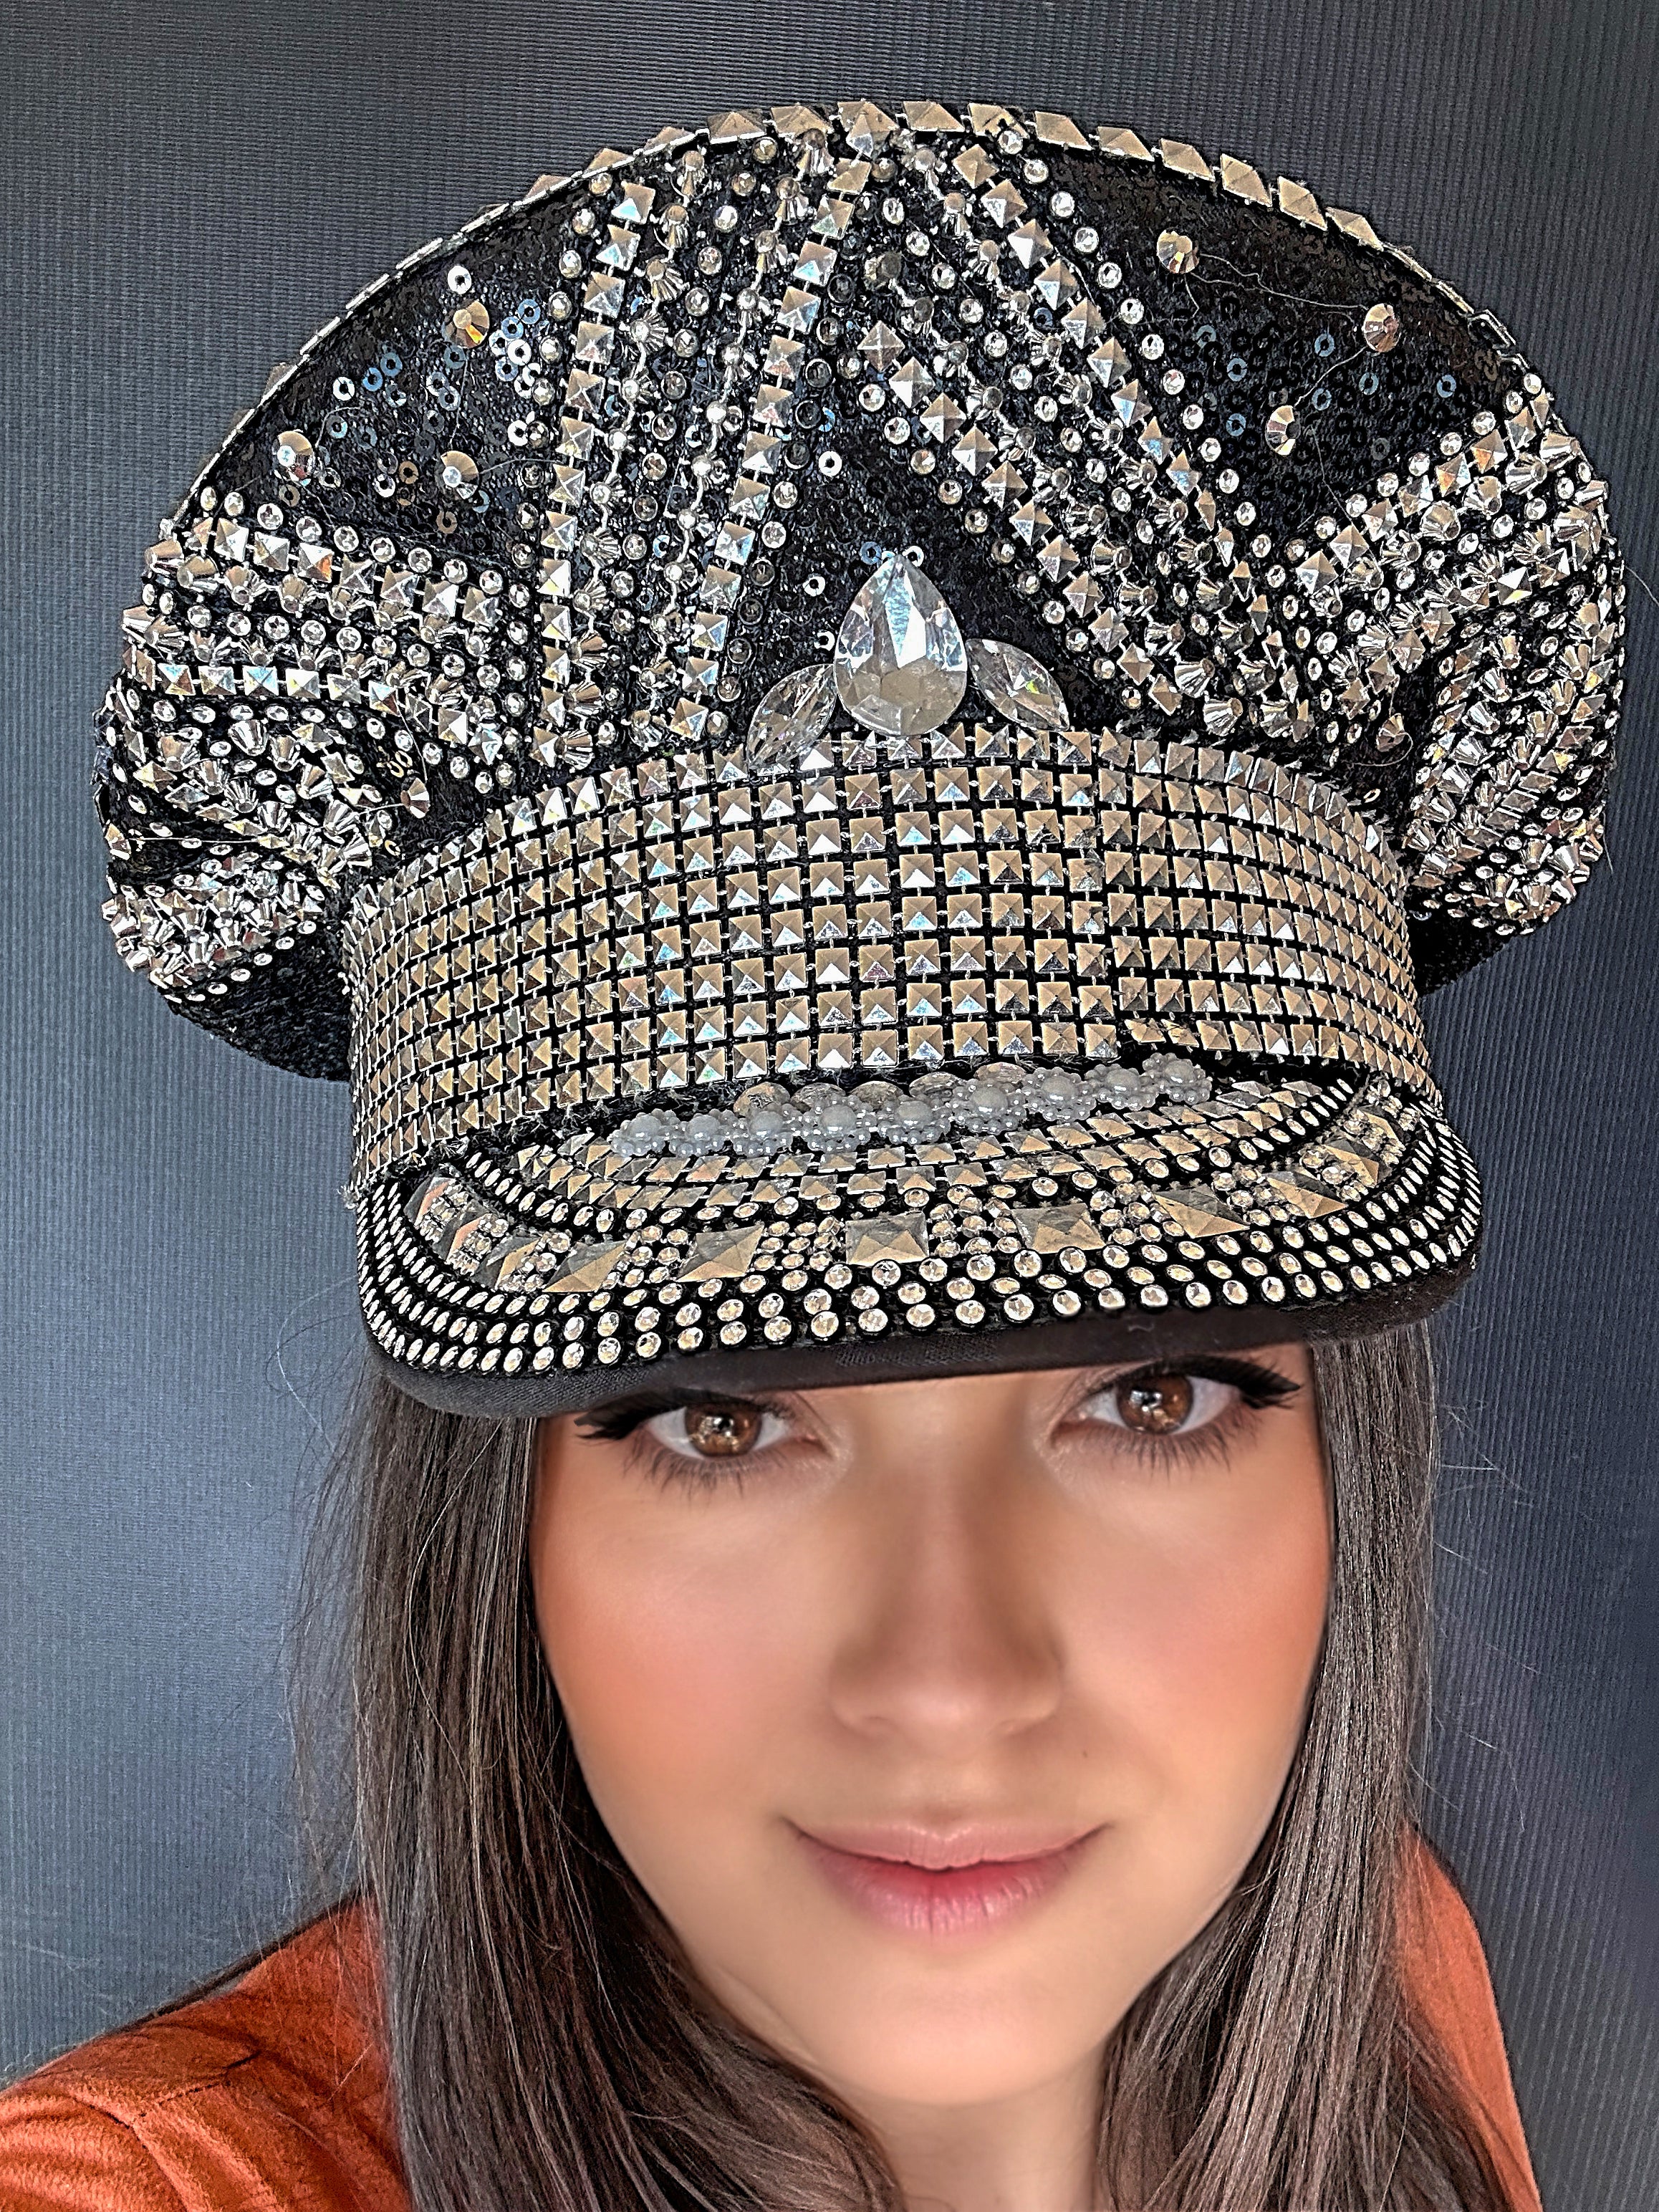 Black and Silver Rhinestone Hat / Sequin Hat / Party Captain Hat / Festival Hat, EDC Hat, Rave Hat / Birthday Hat / Custom Phrase Hat